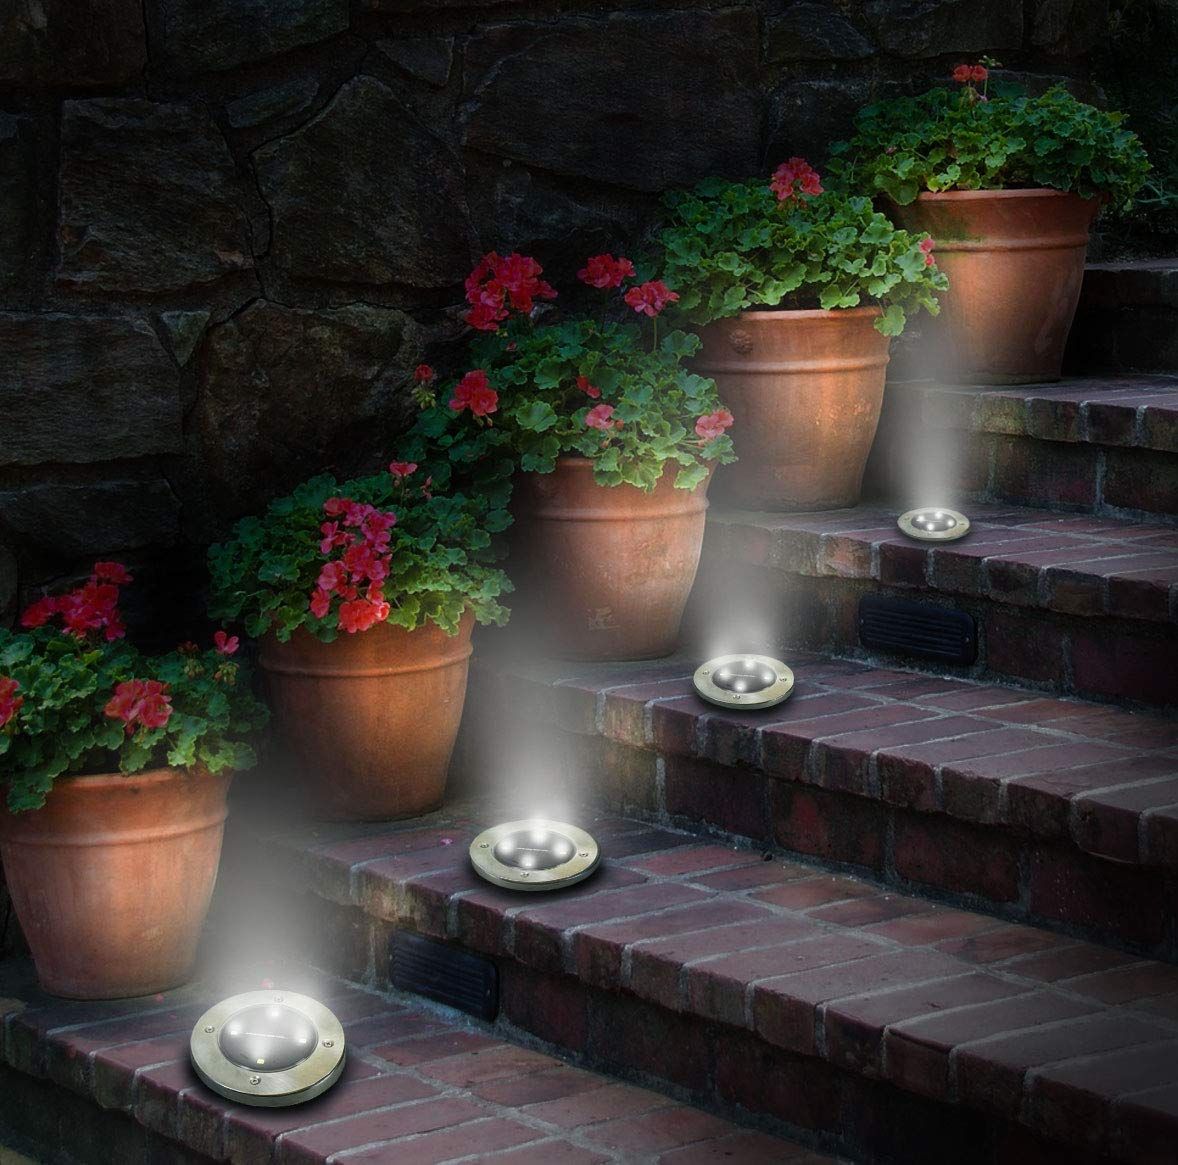 Solar disk lights perfectly arrange on the steps beside flower pots.